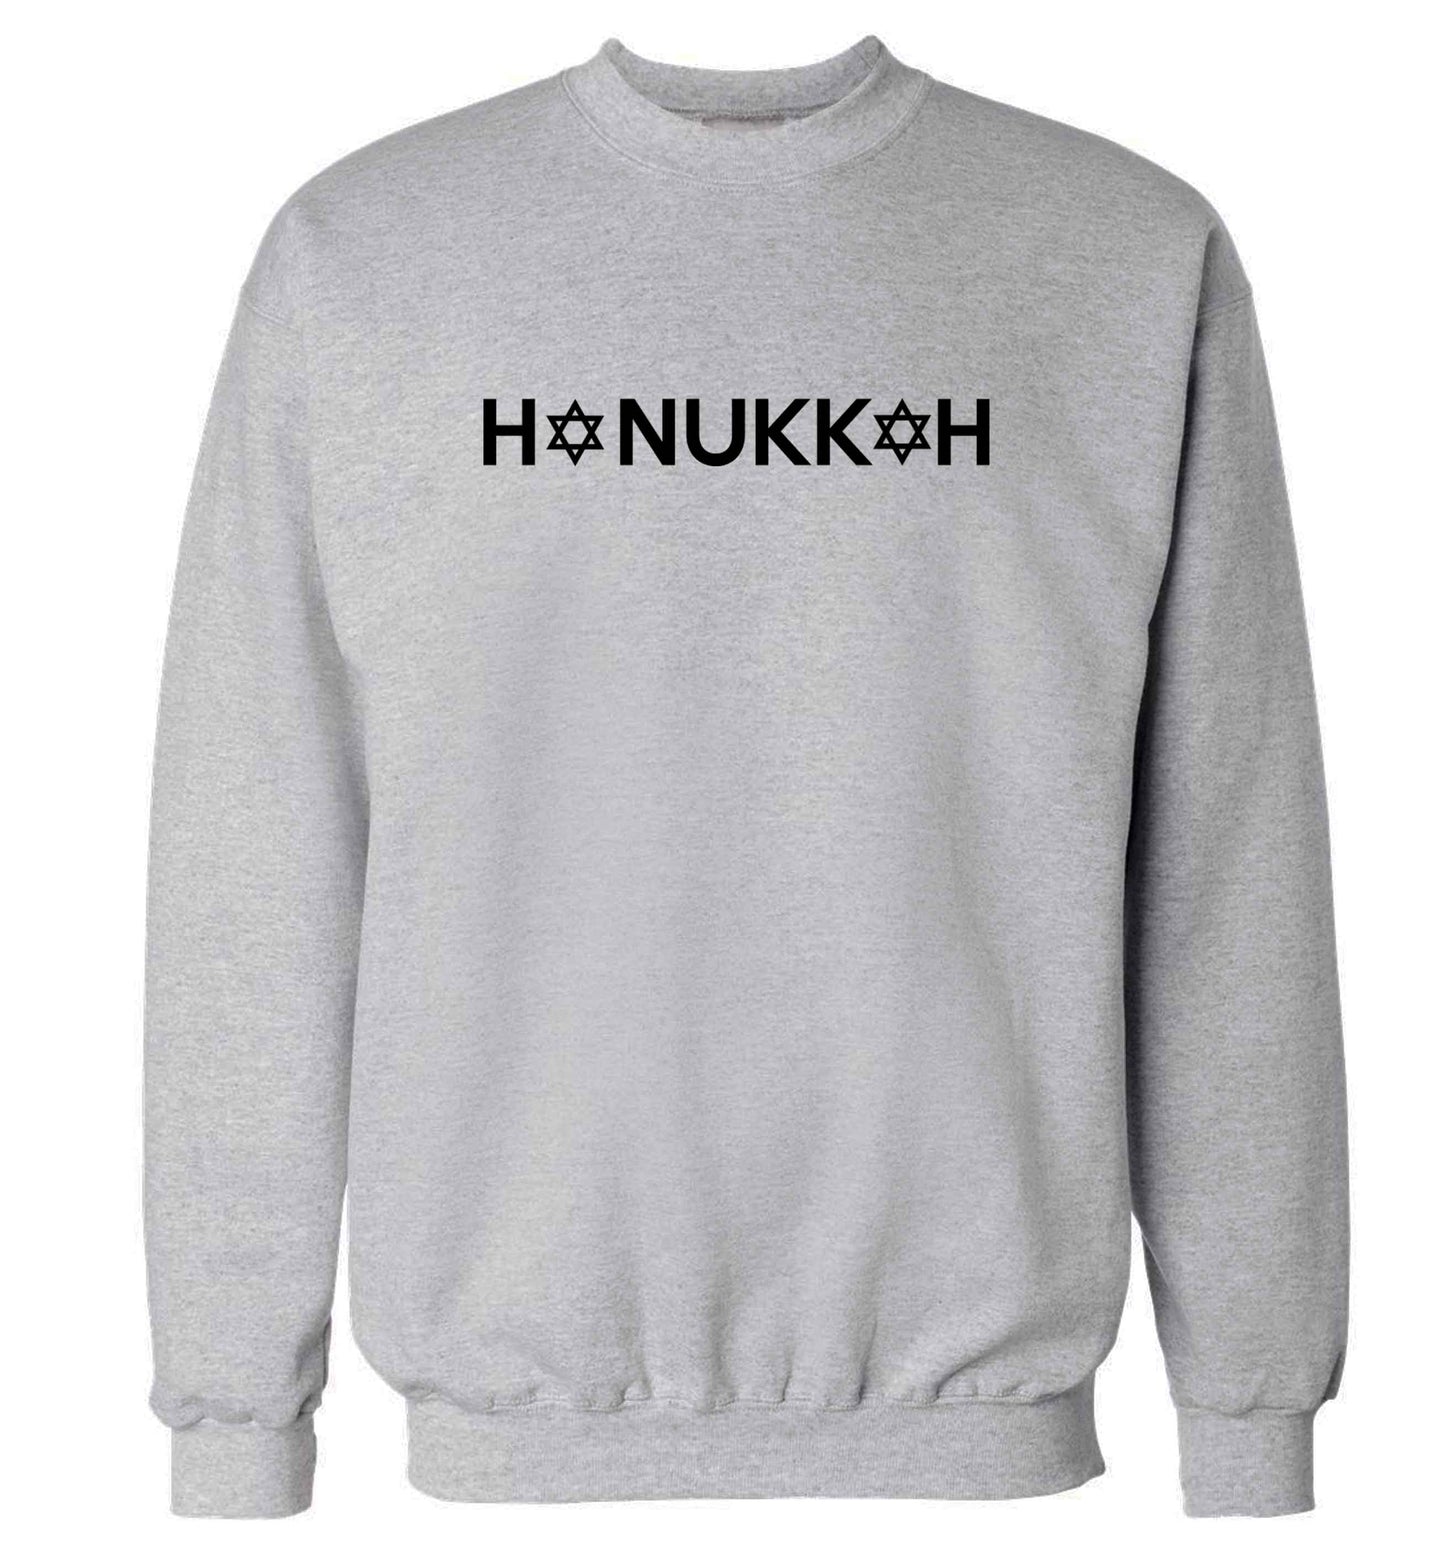 Hanukkah star of david adult's unisex grey sweater 2XL